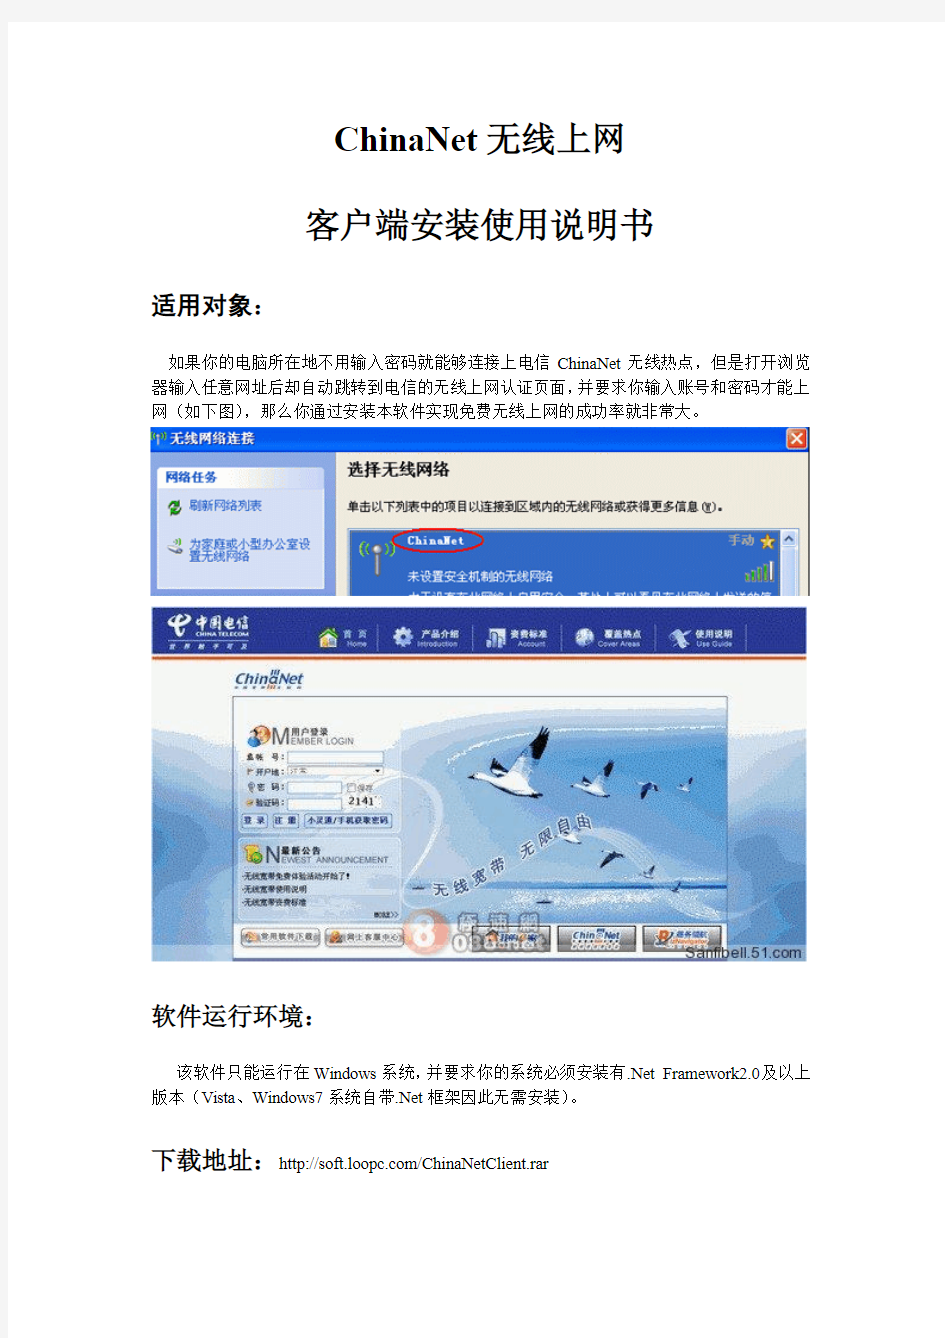 ChinaNet无线上网客户端使用说明书